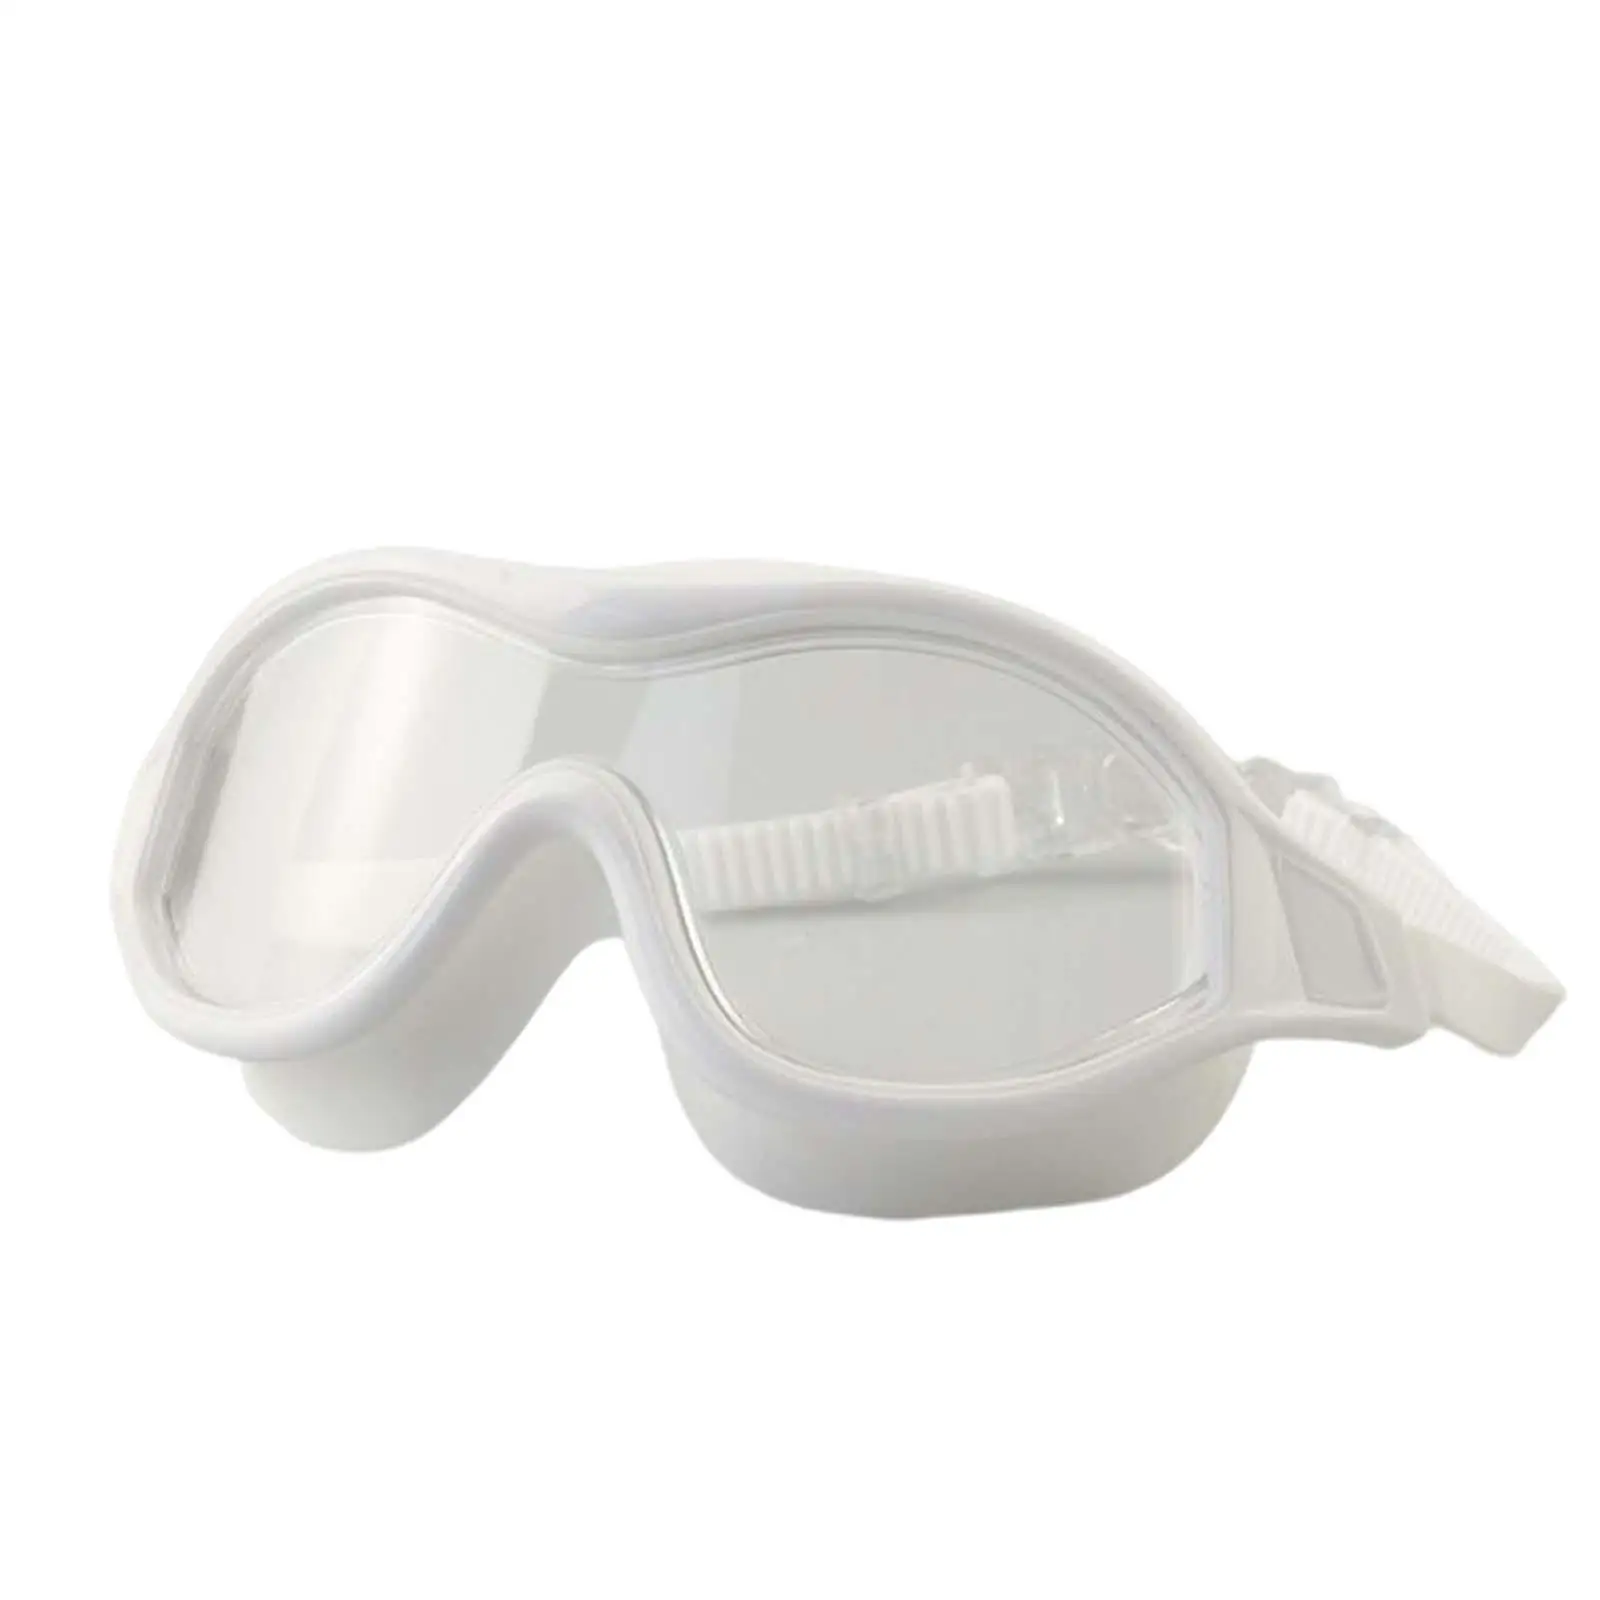 Swim Glasses Anti Fog Adult Swimming Goggles Diving Eyewear Comfortable Adjustable Professional Unisex for Men Outdoor Indoor